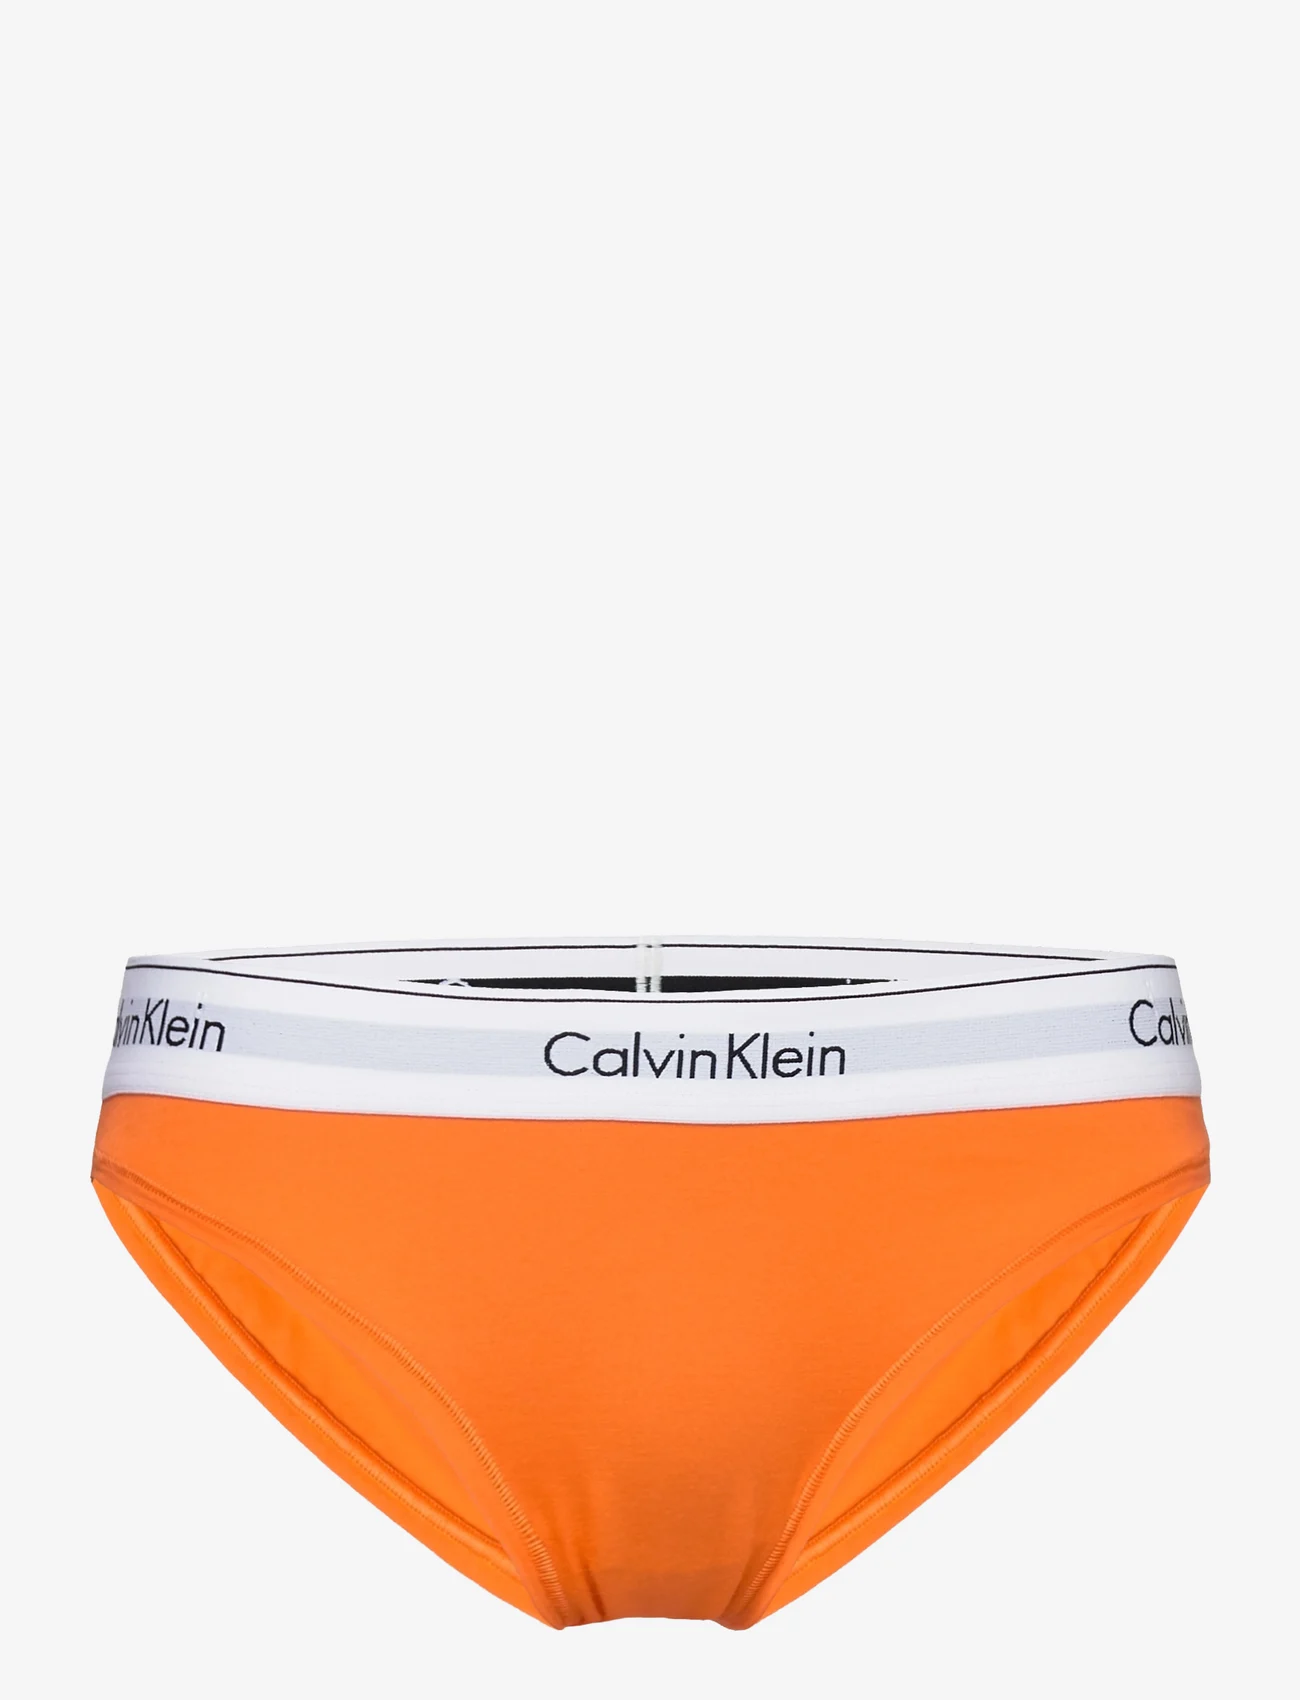 Calvin Klein - BIKINI - briefs - carrot - 0